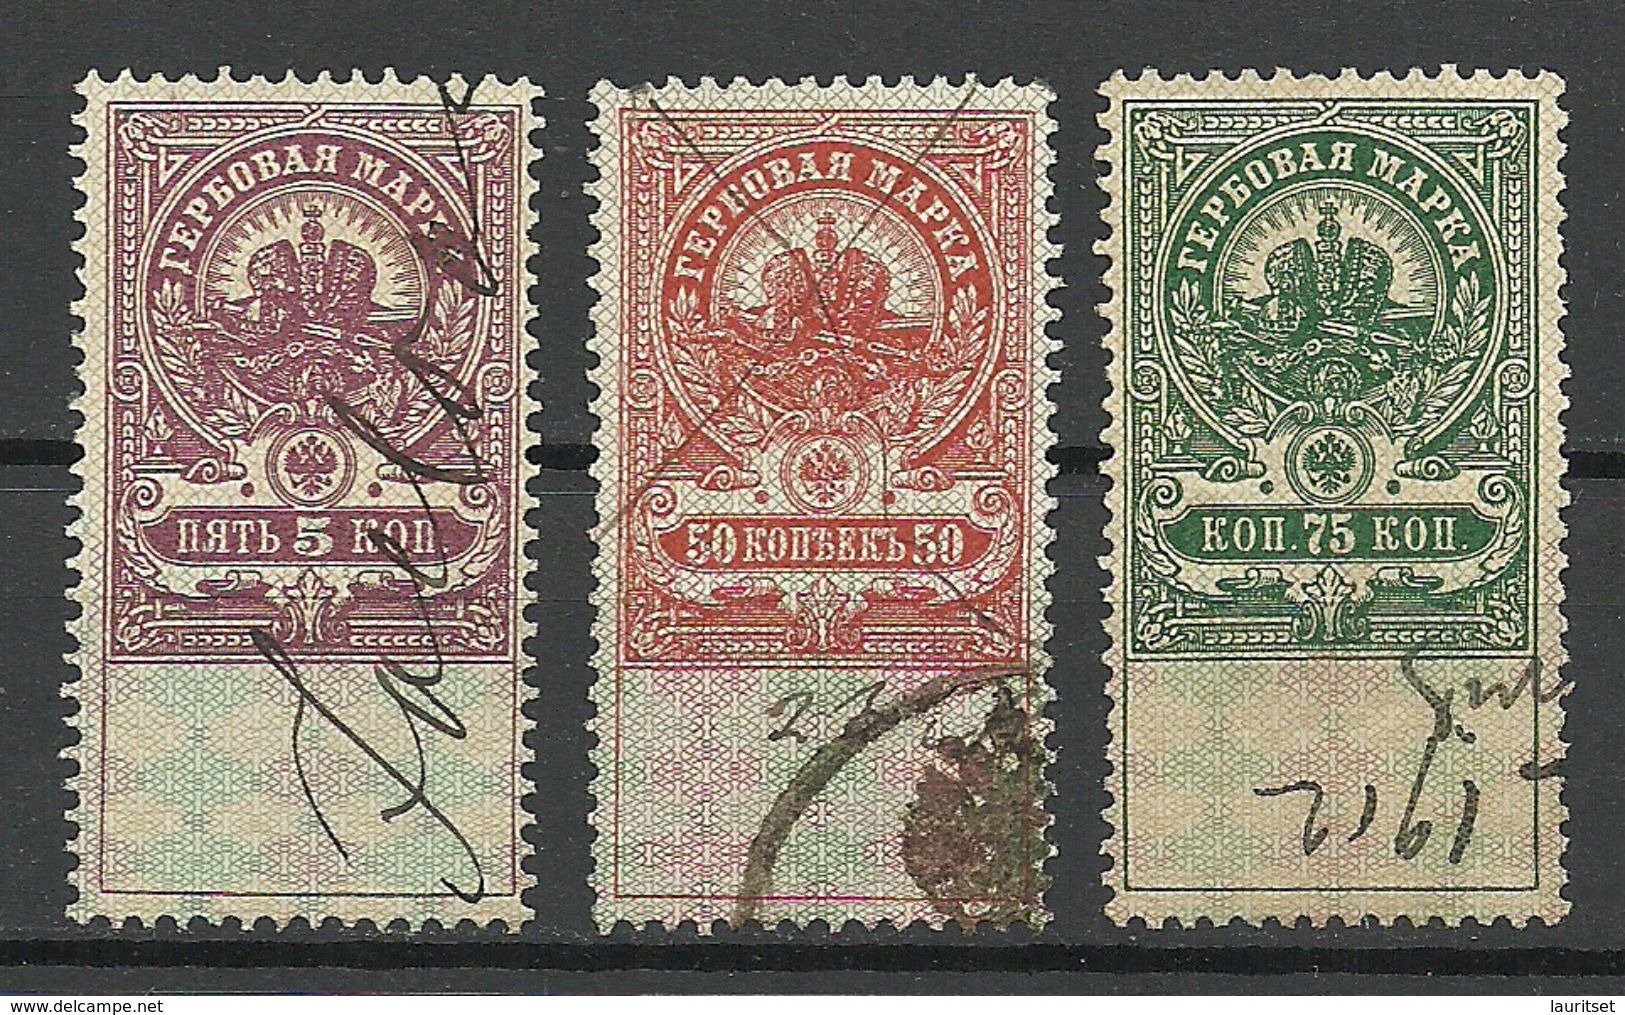 RUSSLAND RUSSIA Russie Ca 1890-1900 Steuermarke Revenue Tax Stamps O - Revenue Stamps